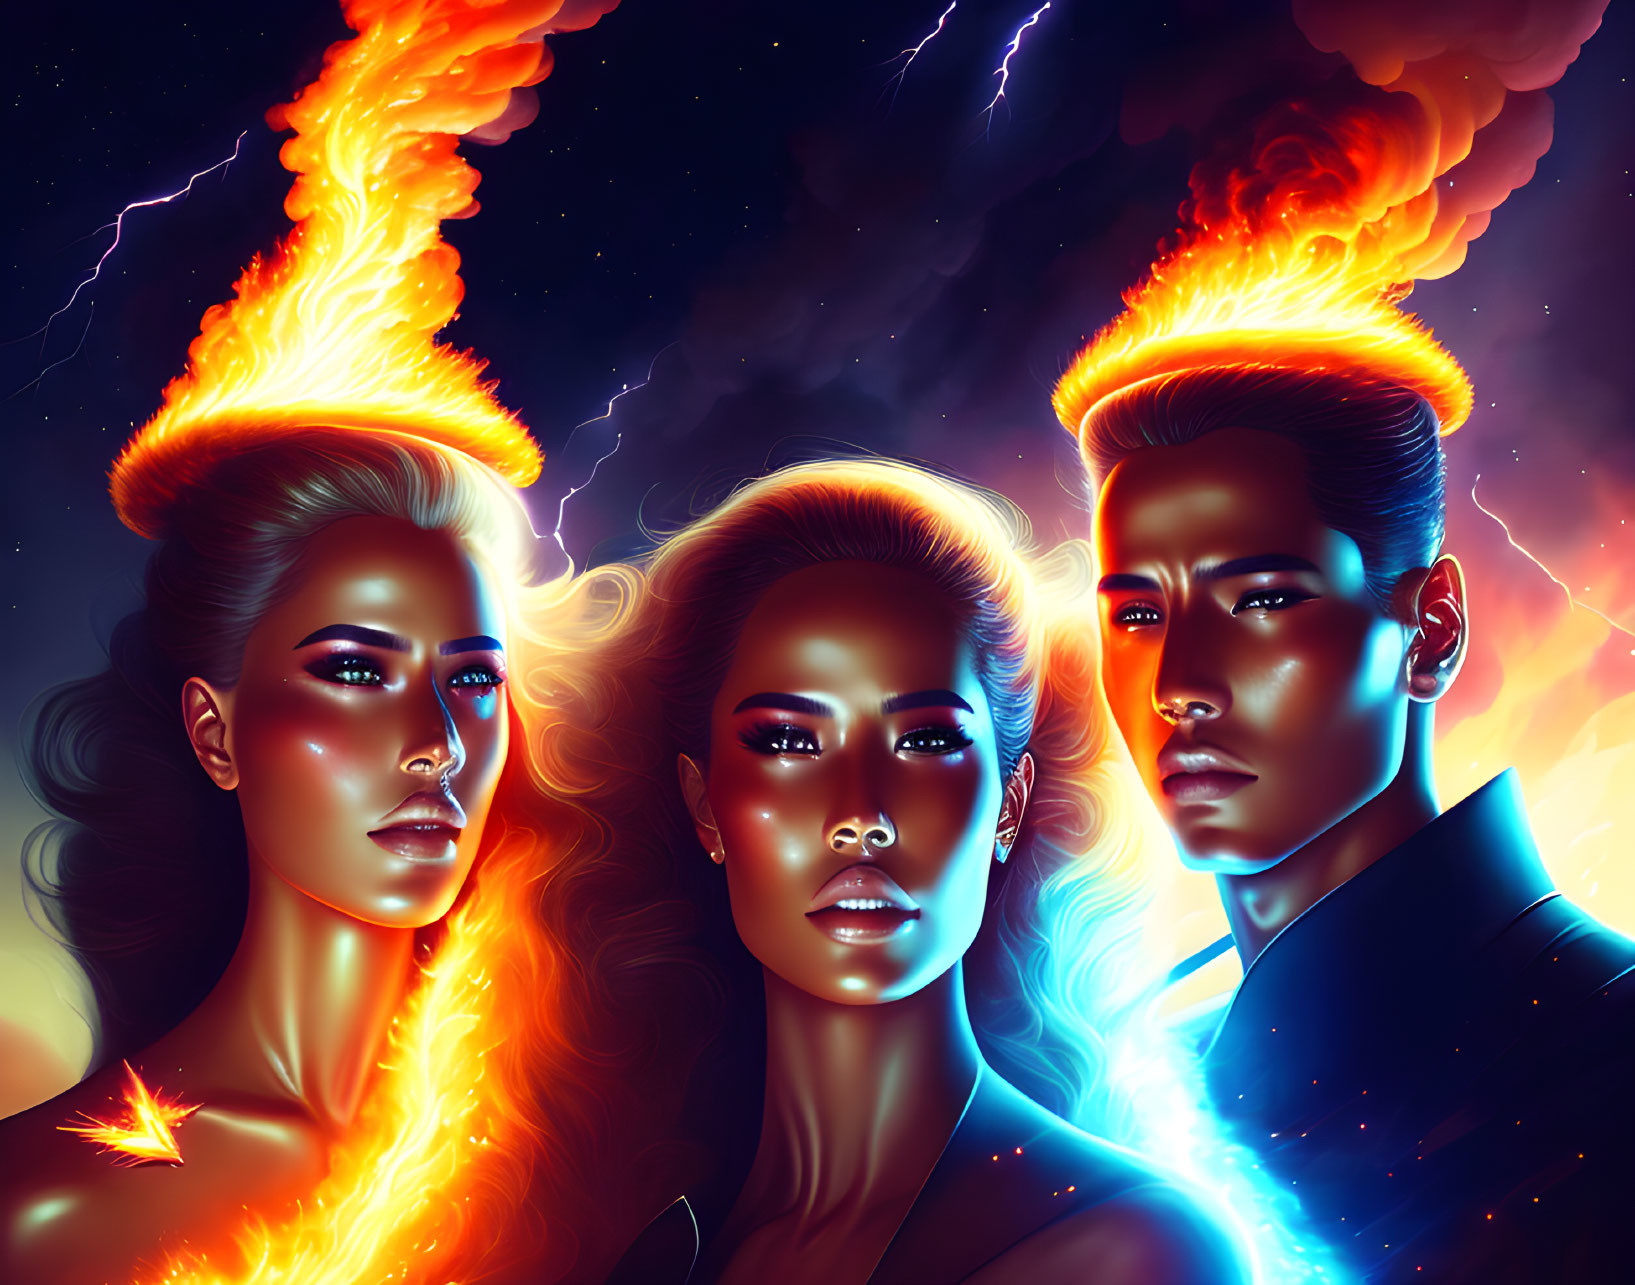 Stylized fiery hair people against cosmic lightning background